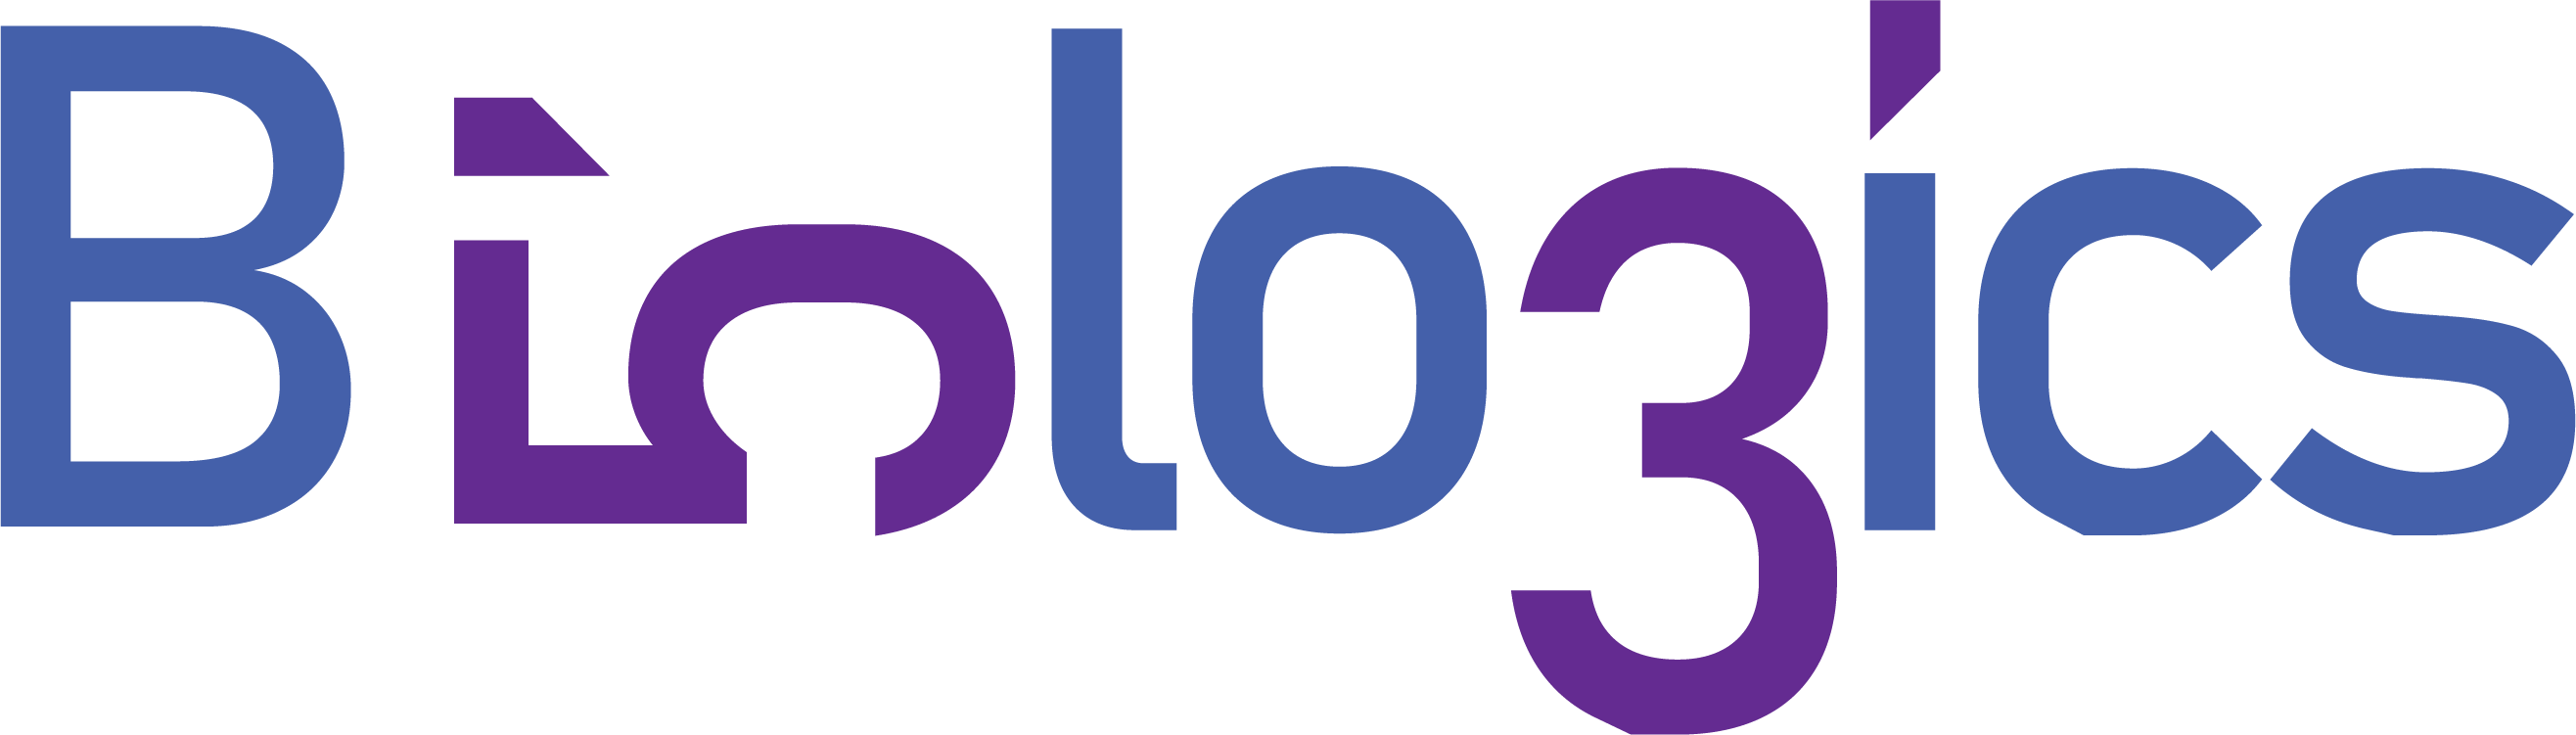 53Biologics Logo